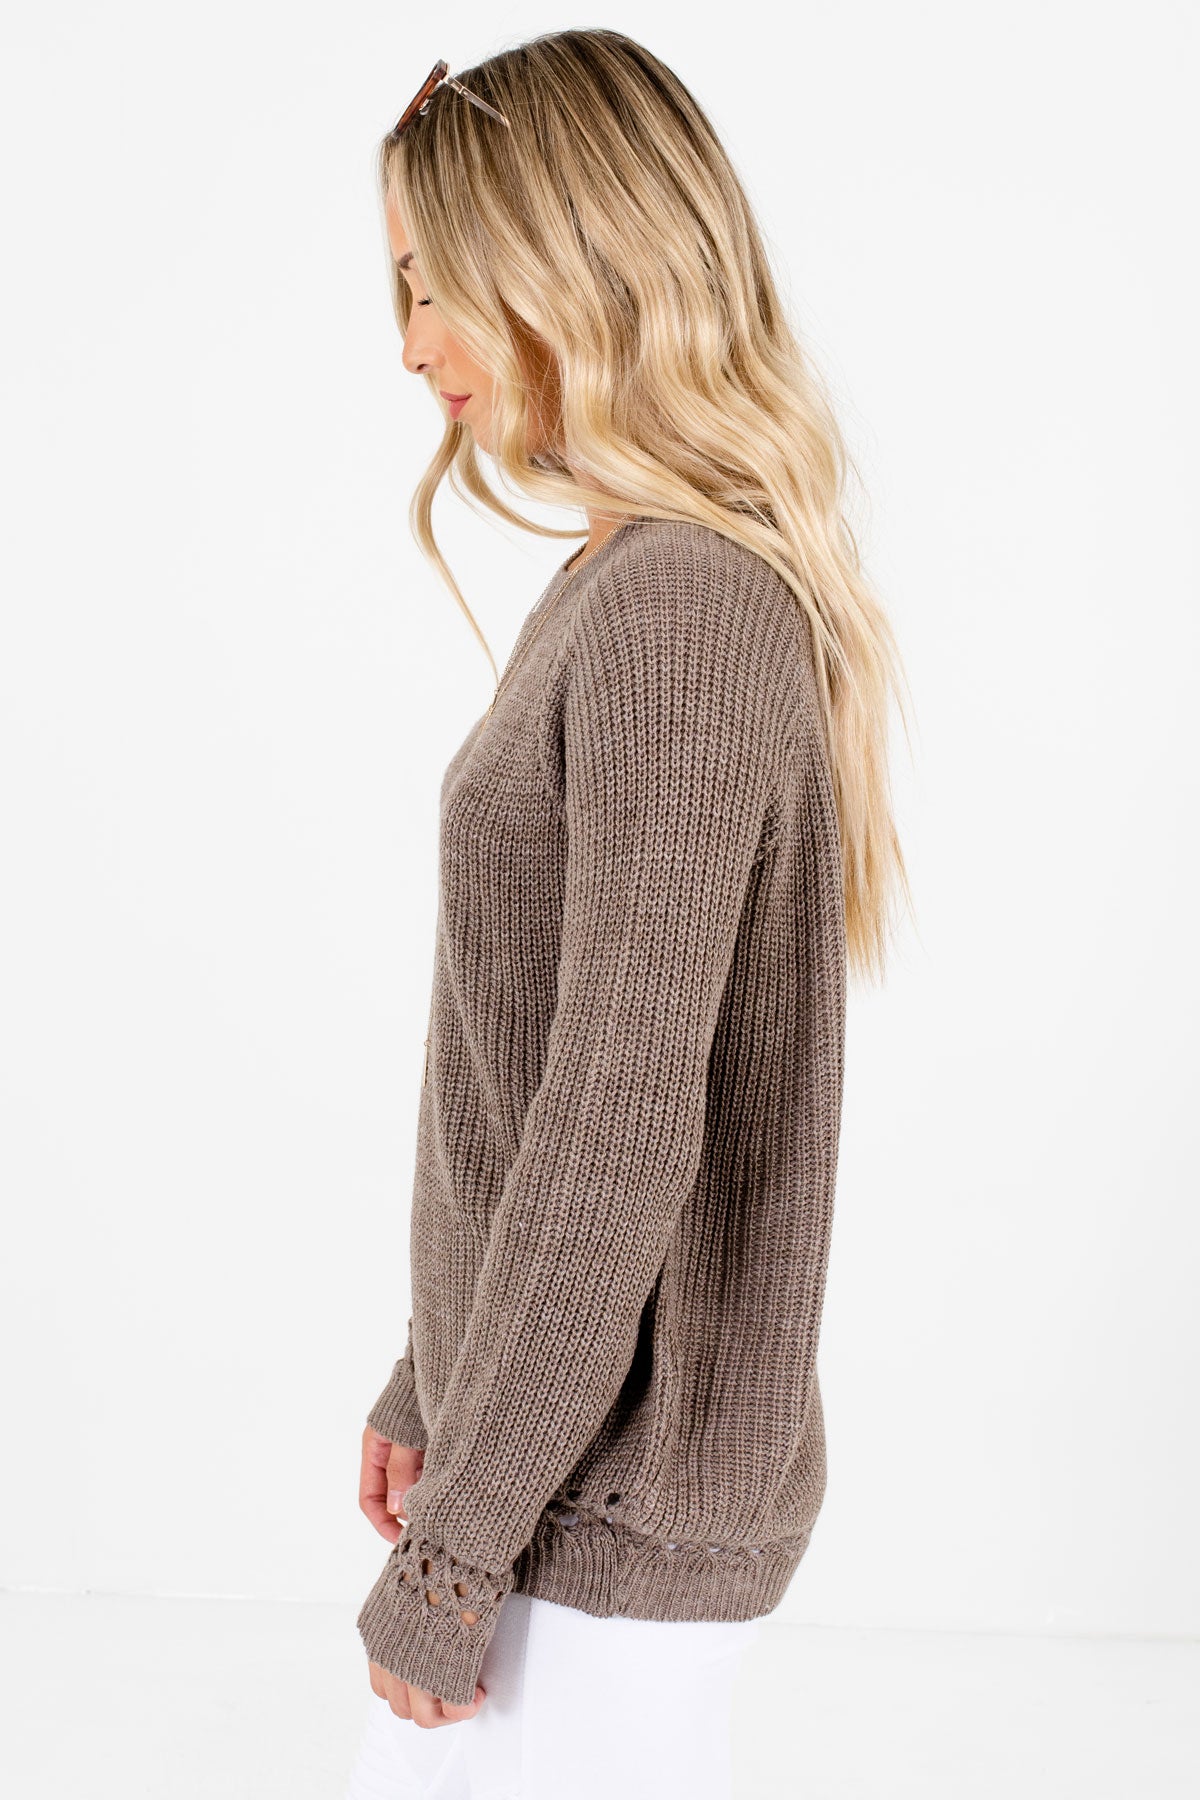 Mocha Brown Round Neckline Boutique Sweaters for Women